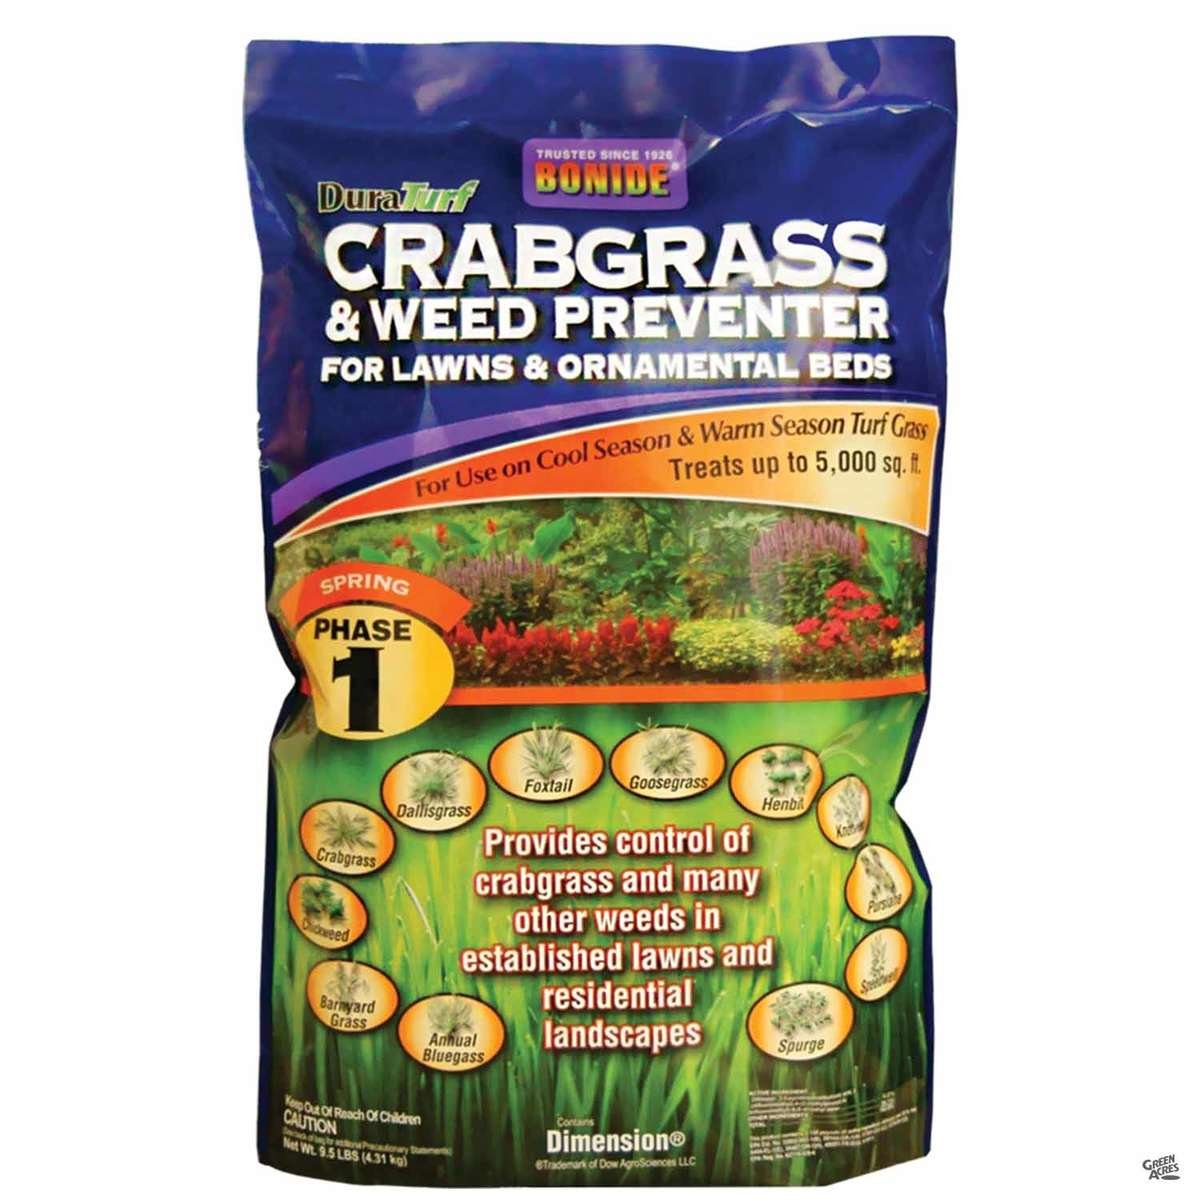 Bonide® Crabgrass & Weed Preventer